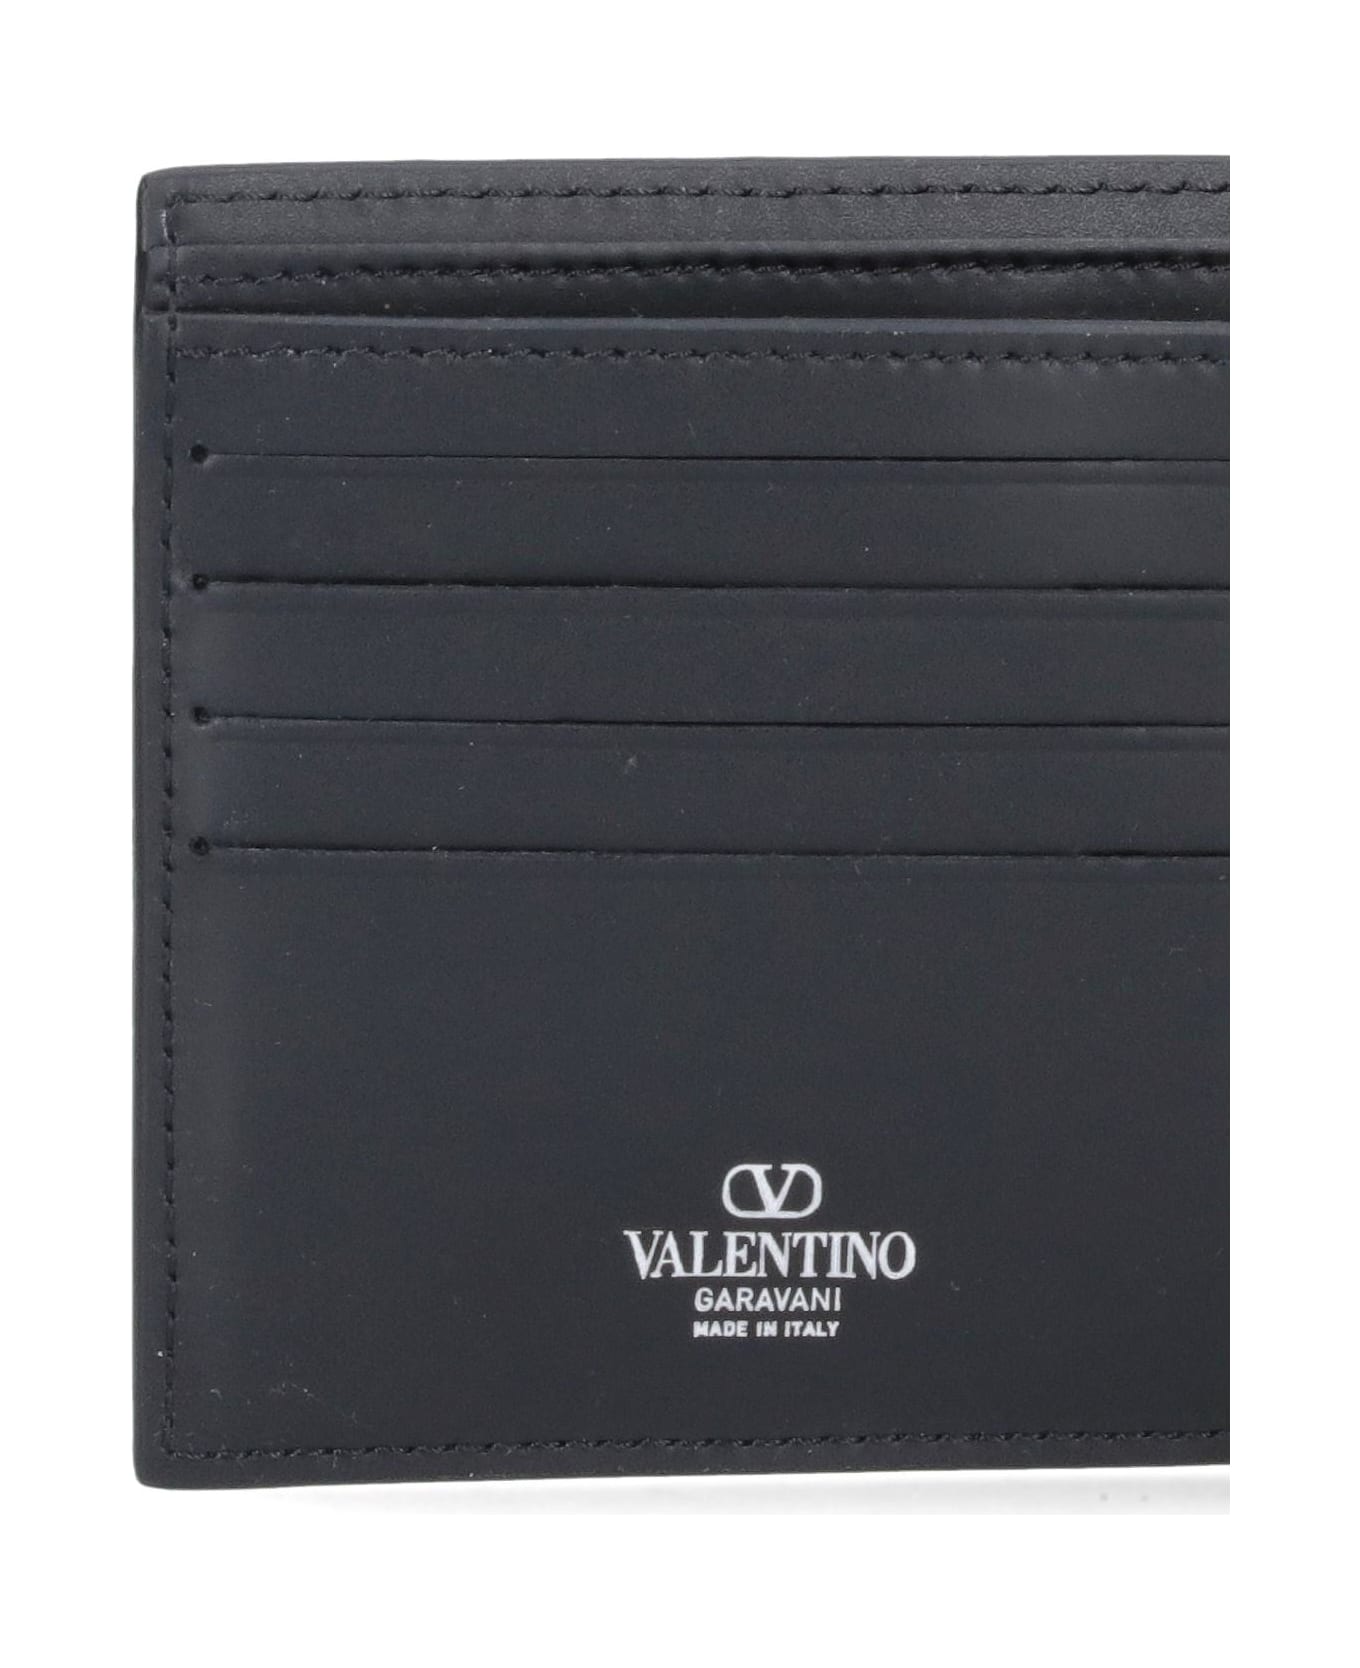 Valentino Garavani Logo Wallet - Nero/bianco 財布